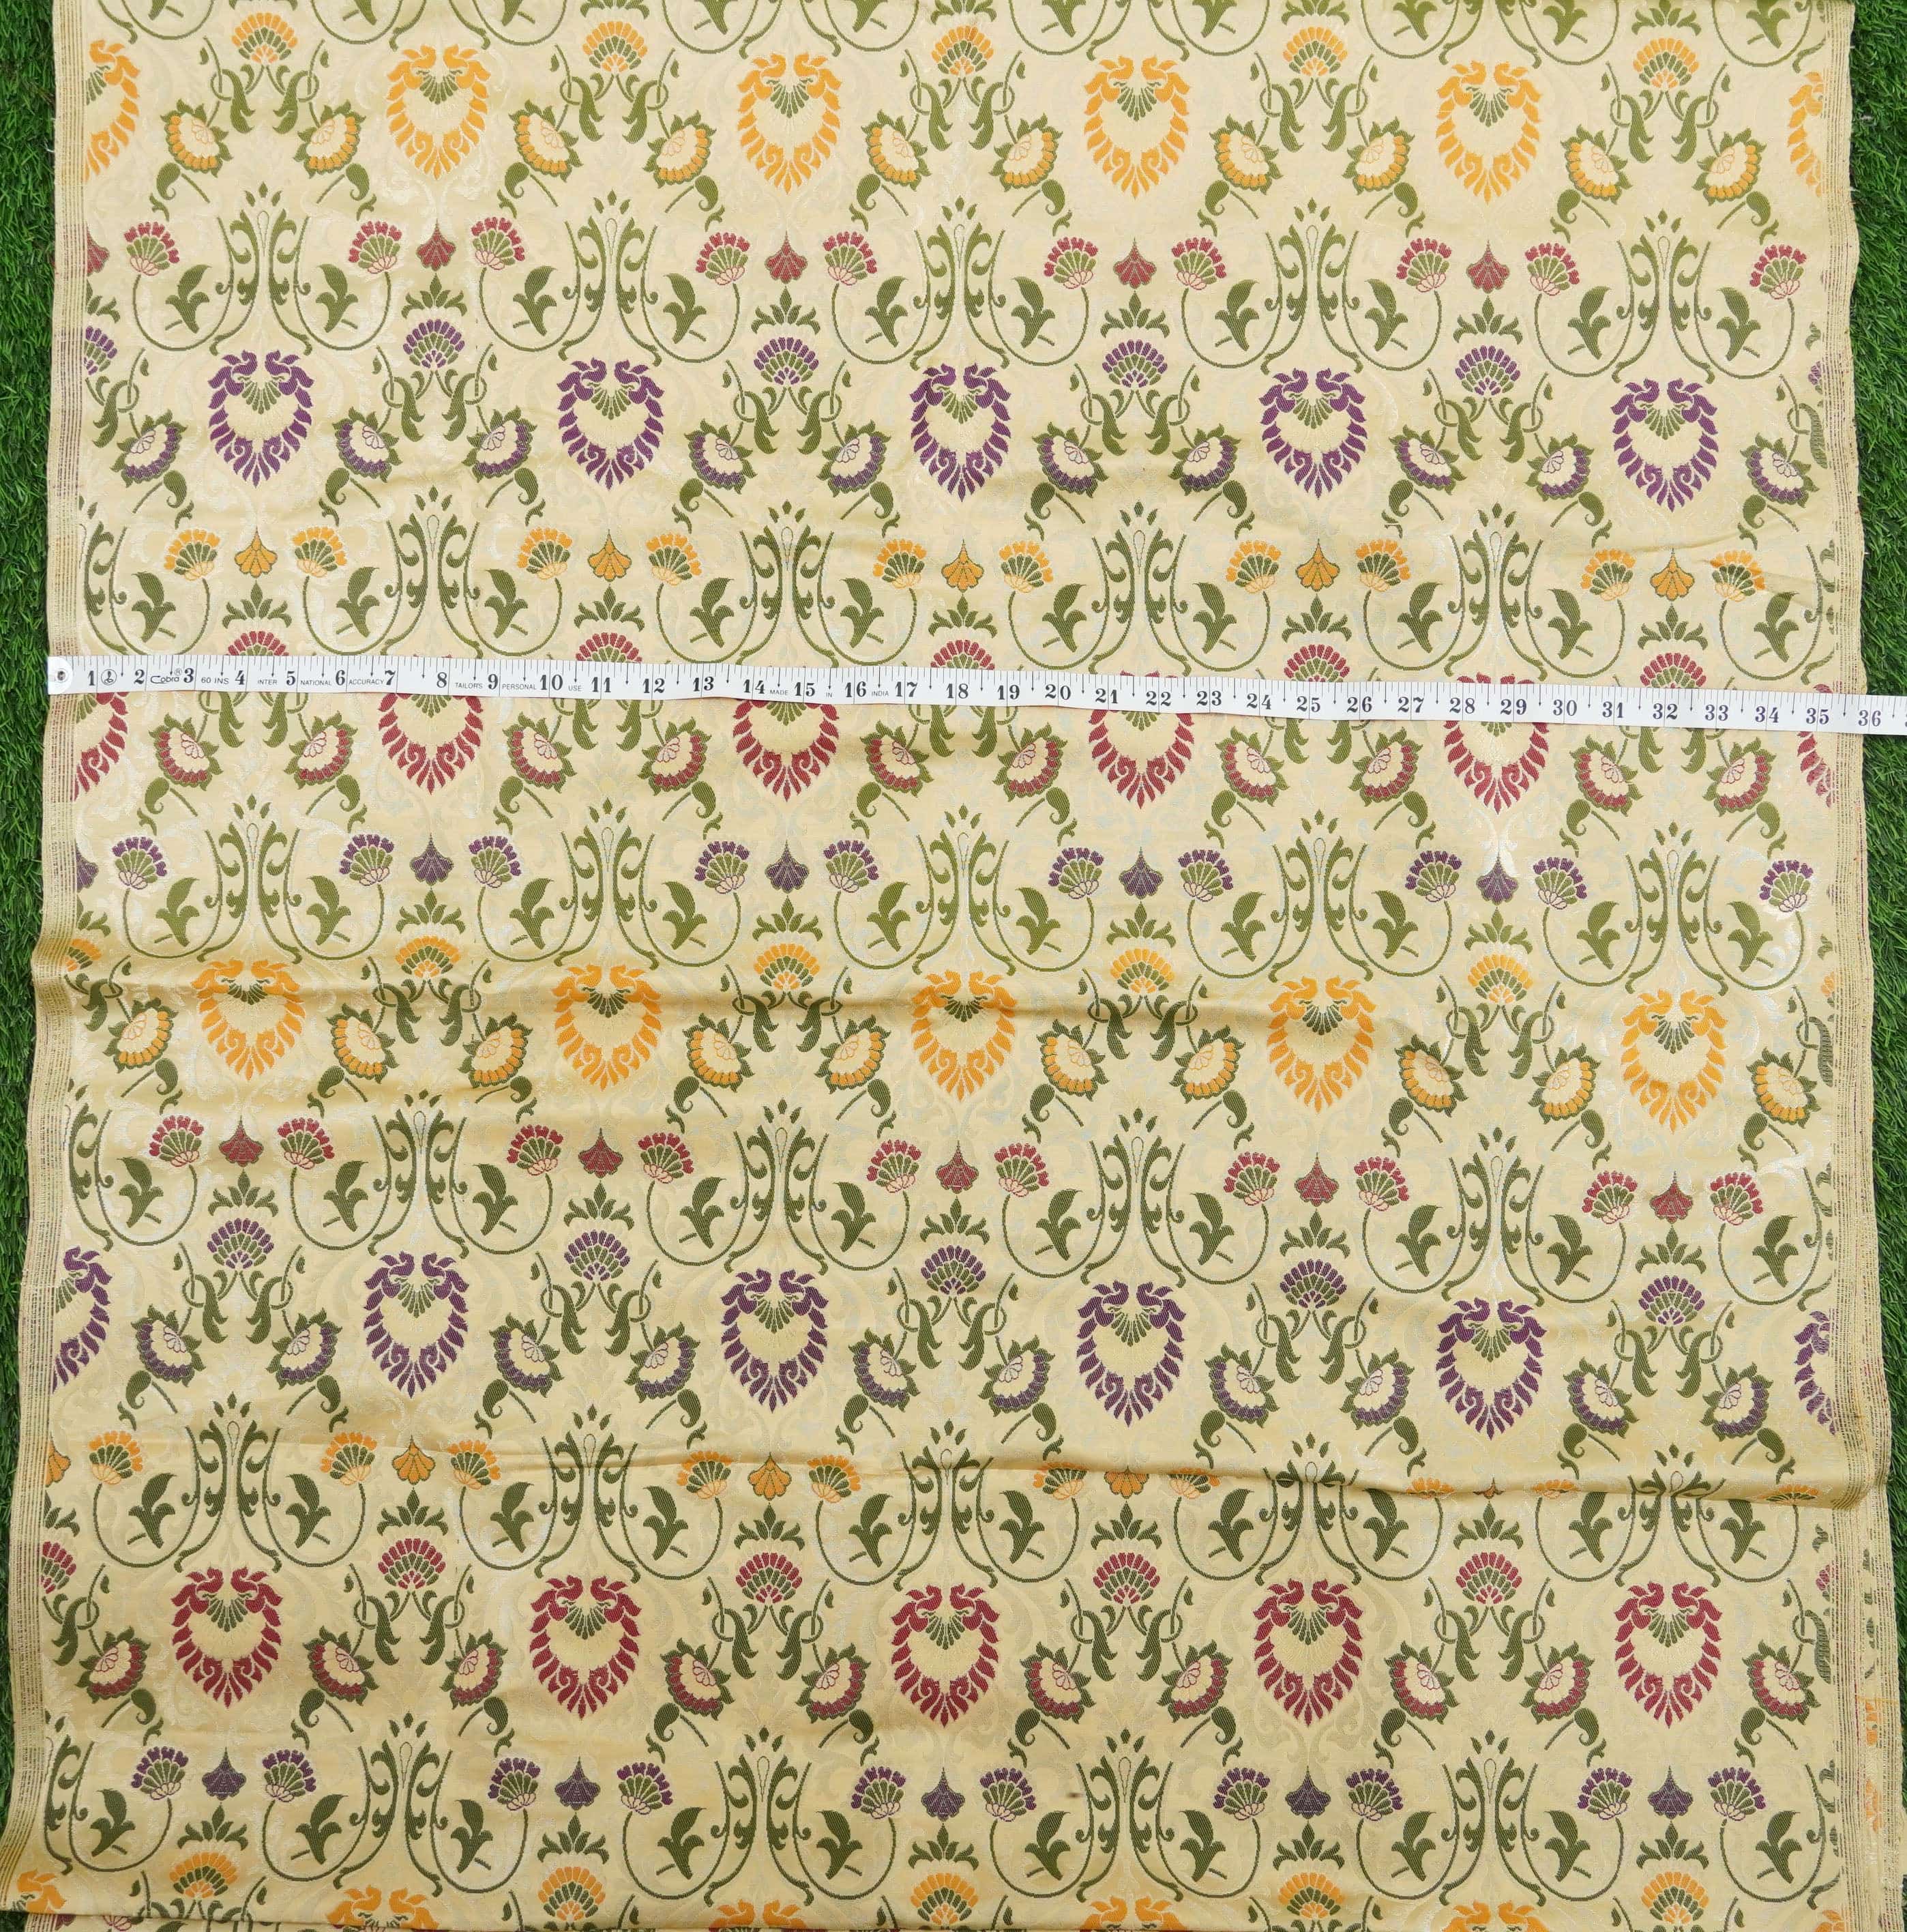 Kinkhab / Kimkhab Brocade Banarasi Fabric